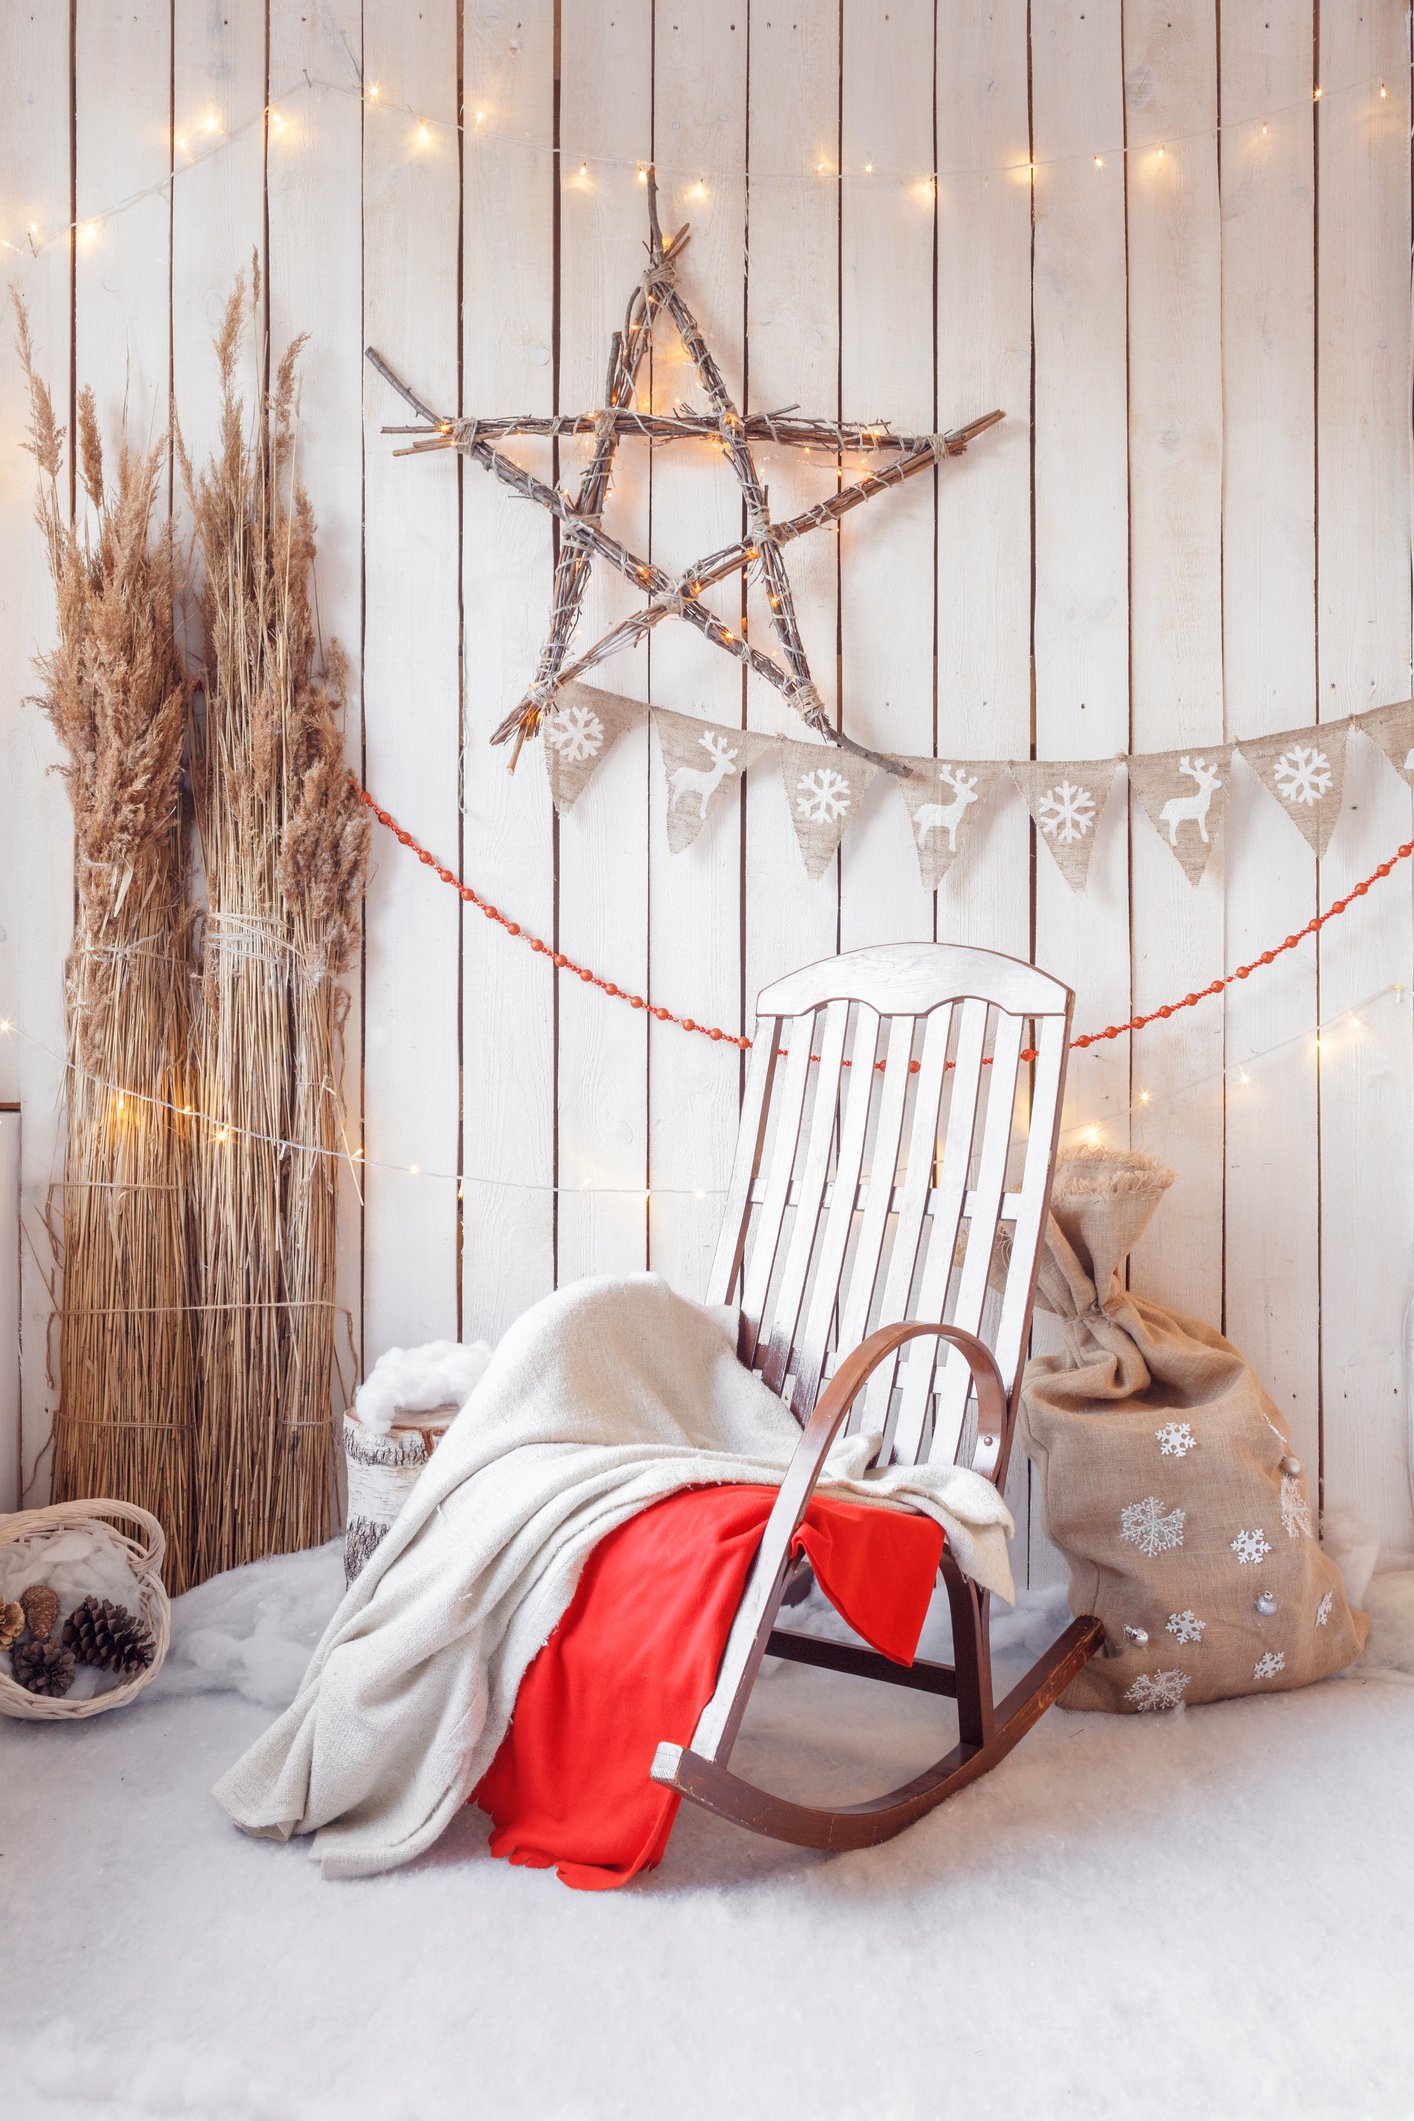 4 top ιδέες για να διακοσμήσετε το μπαλκόνι σας για τα Χριστούγεννα και να το ζηλεύουν όλοι!